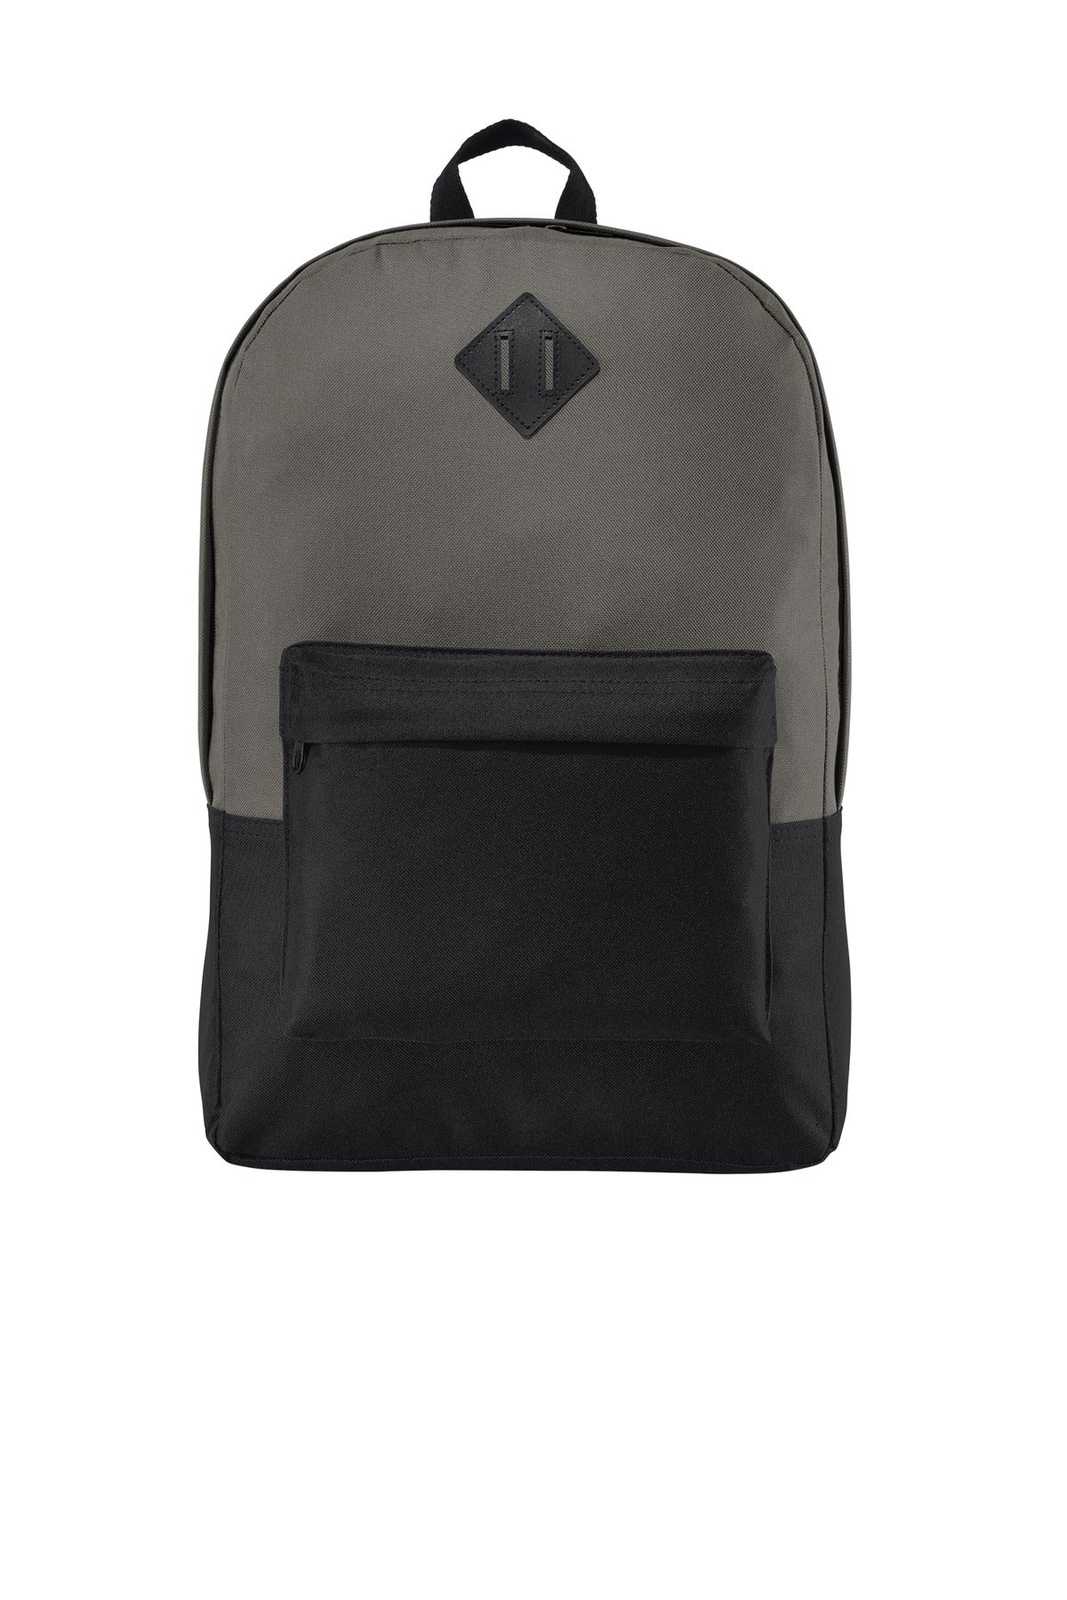 Port Authority BG7150 Retro Backpack - Dark Charcoal Black - HIT a Double - 1